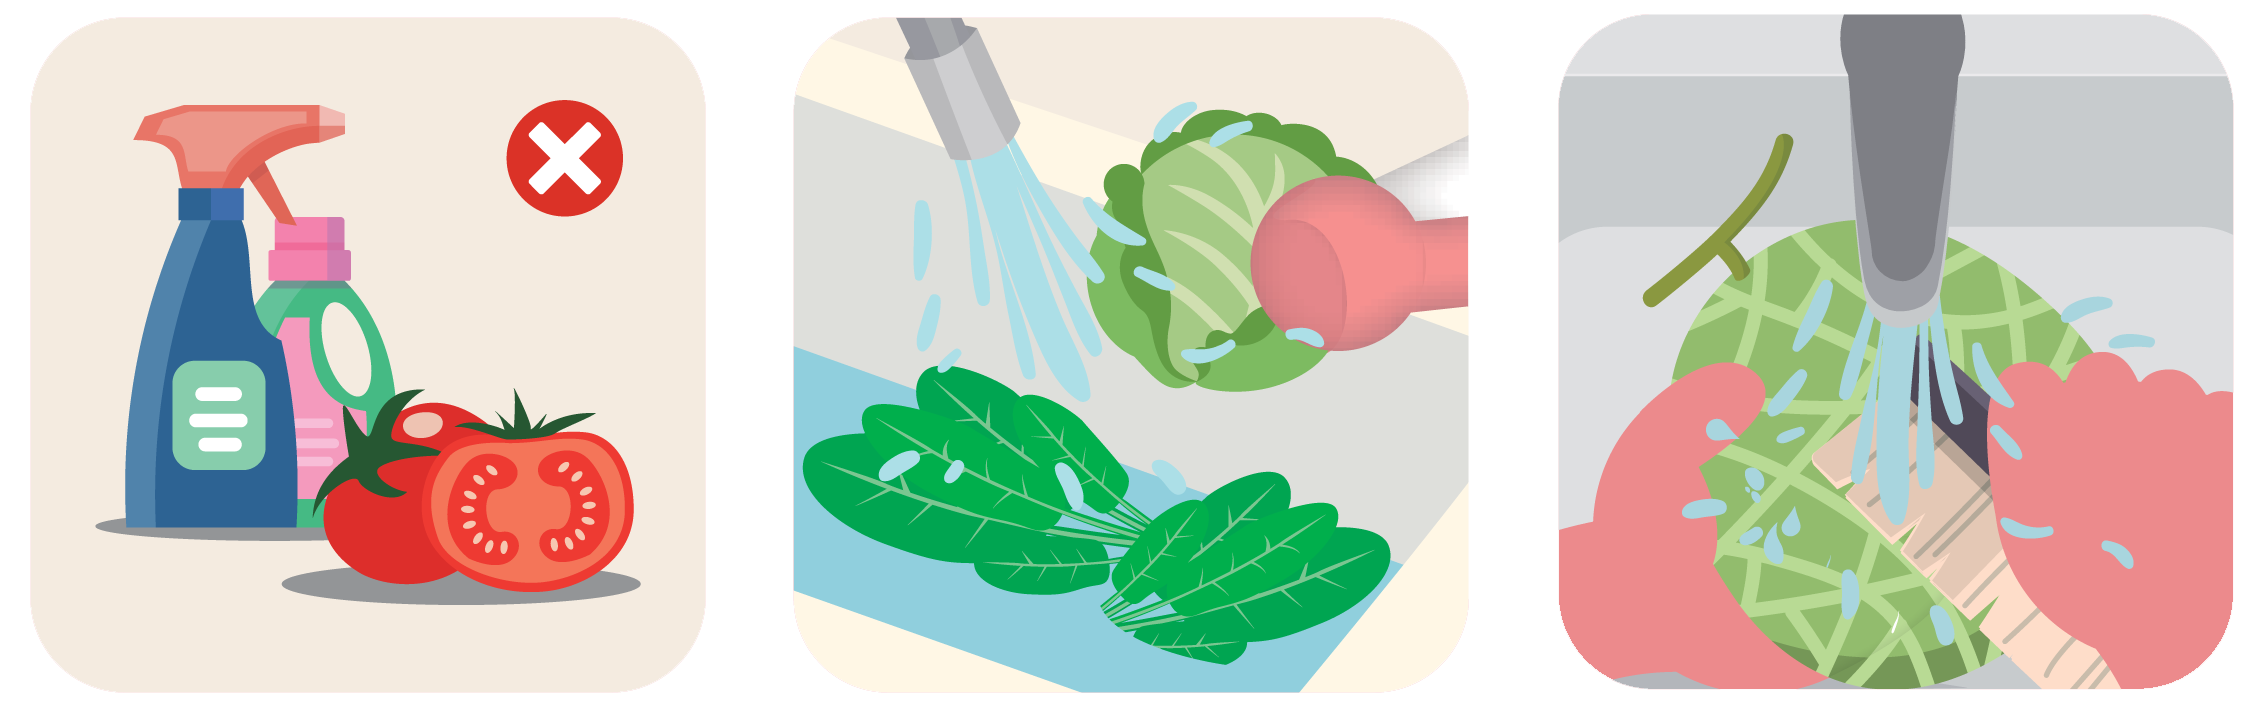 Wash vegetables thoroughly under running water